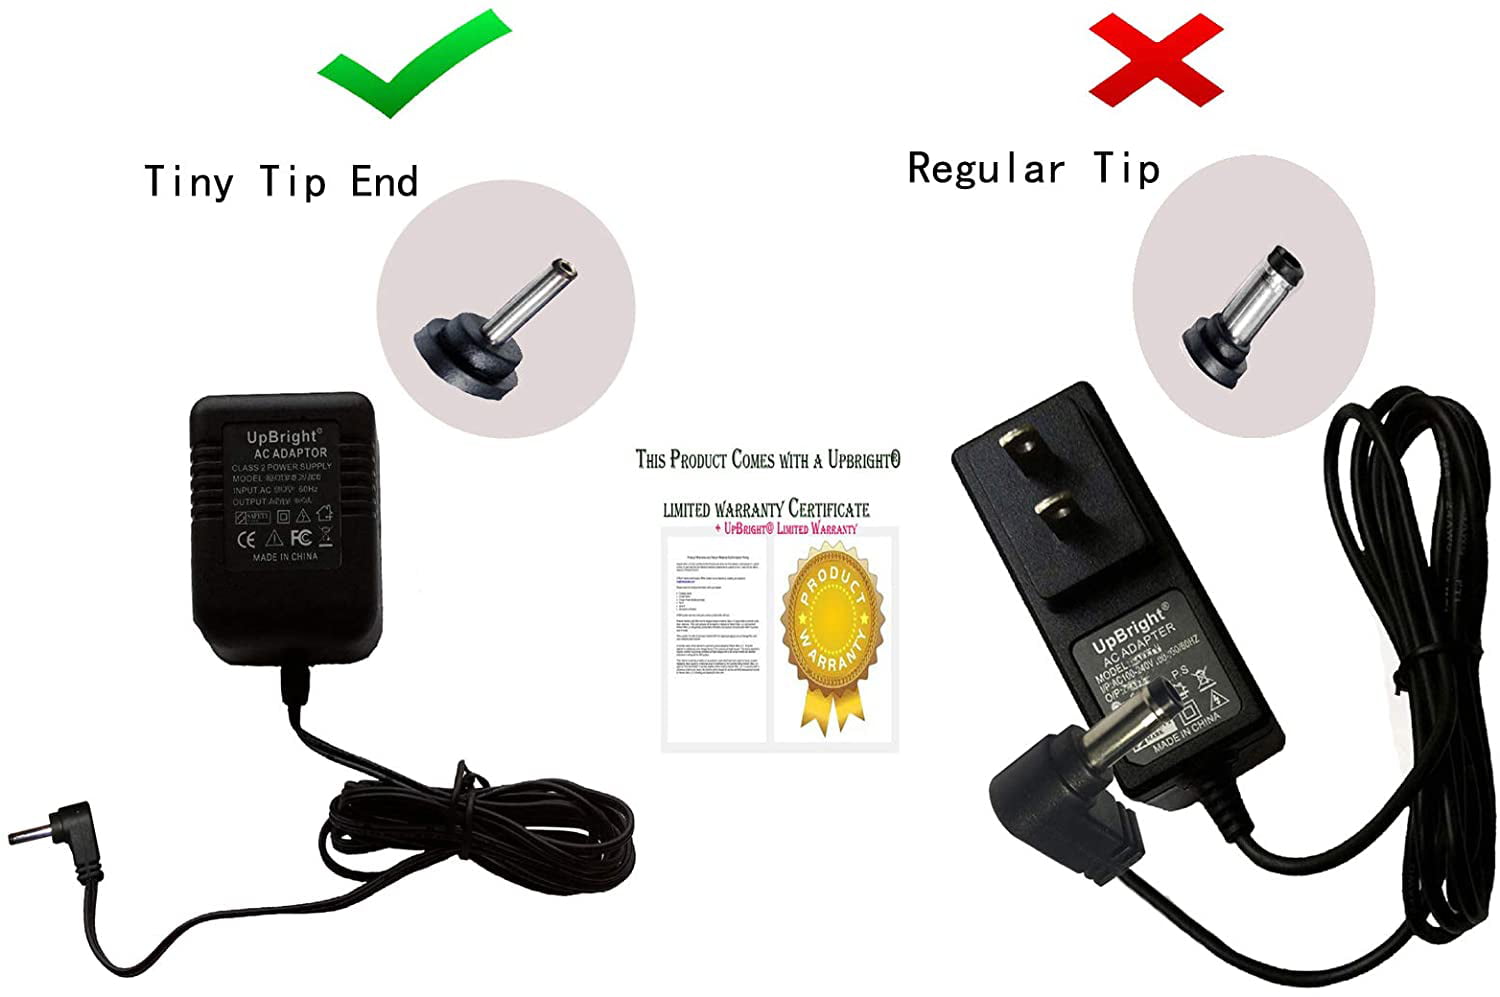 GulaK Extra Handset Cradle 6VAC AC/AC Adapter Replacement for at&T Vtech CS6519 CS6519-14 CS6519-15 CS6519-16 CS6519-17 CS6719 CS6719-2 DECT 6.0 Digital Cordless Phone Answering System NOT 6VDC. 